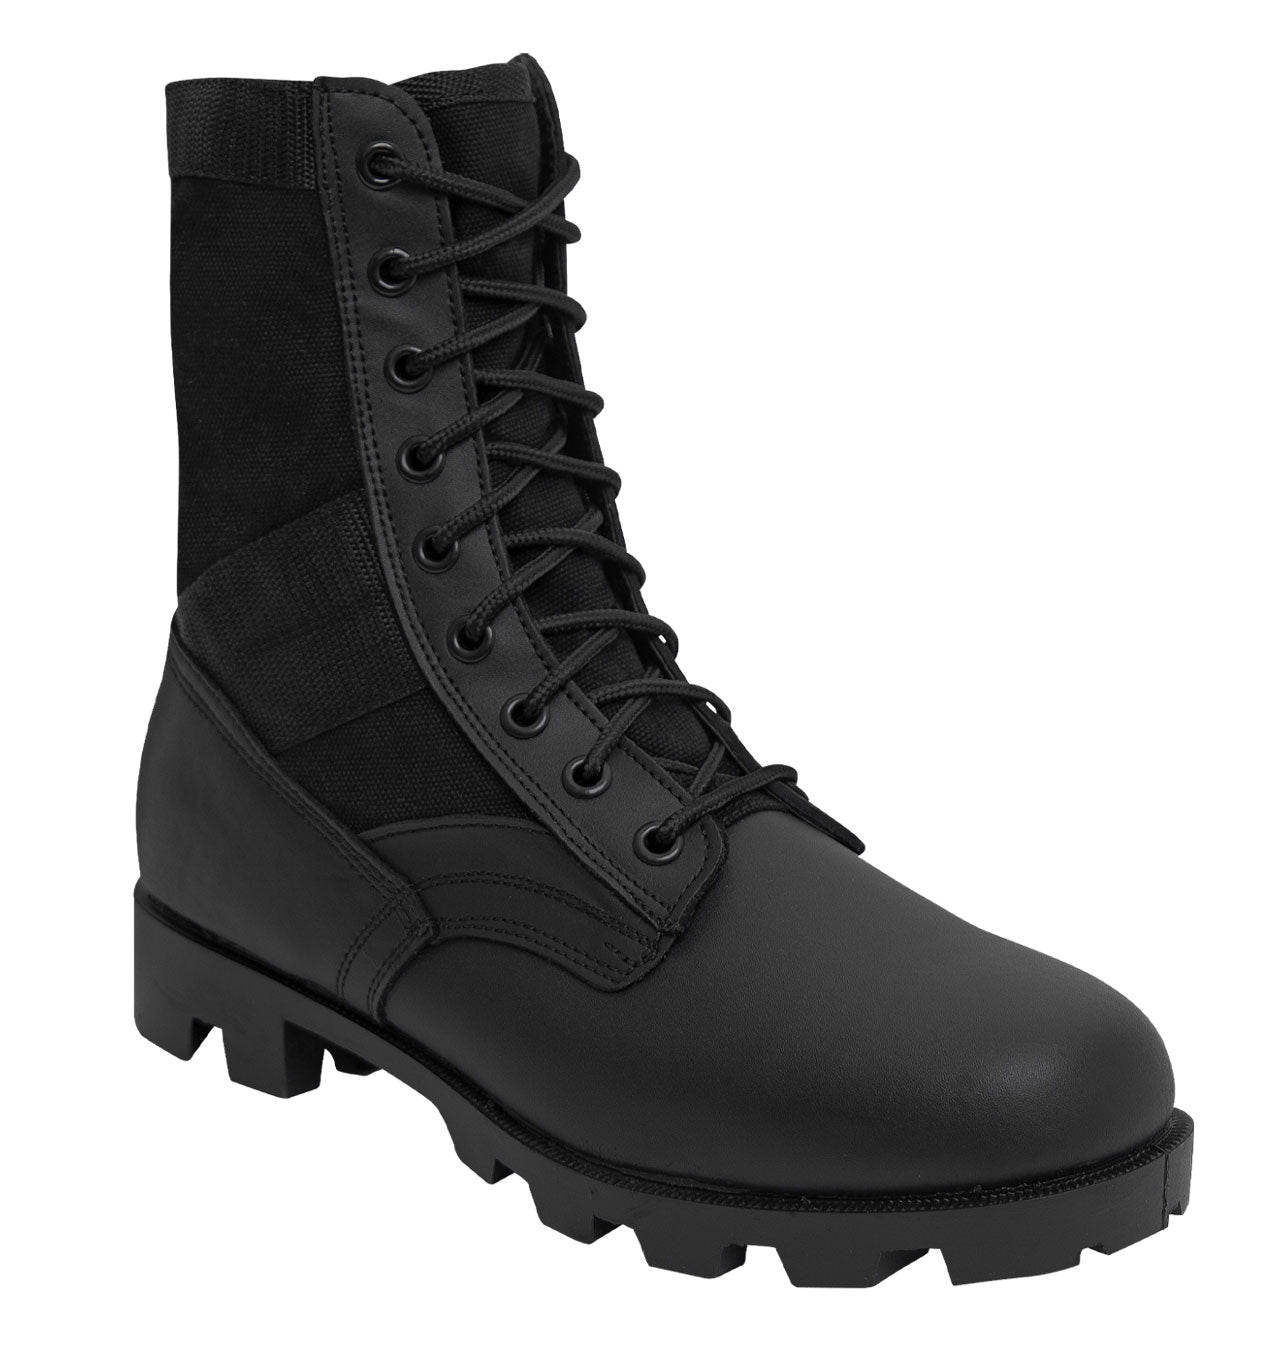 Milspec G.I. Type Black Steel Toe Jungle Boot Jungle Boots MilTac Tactical Military Outdoor Gear Australia